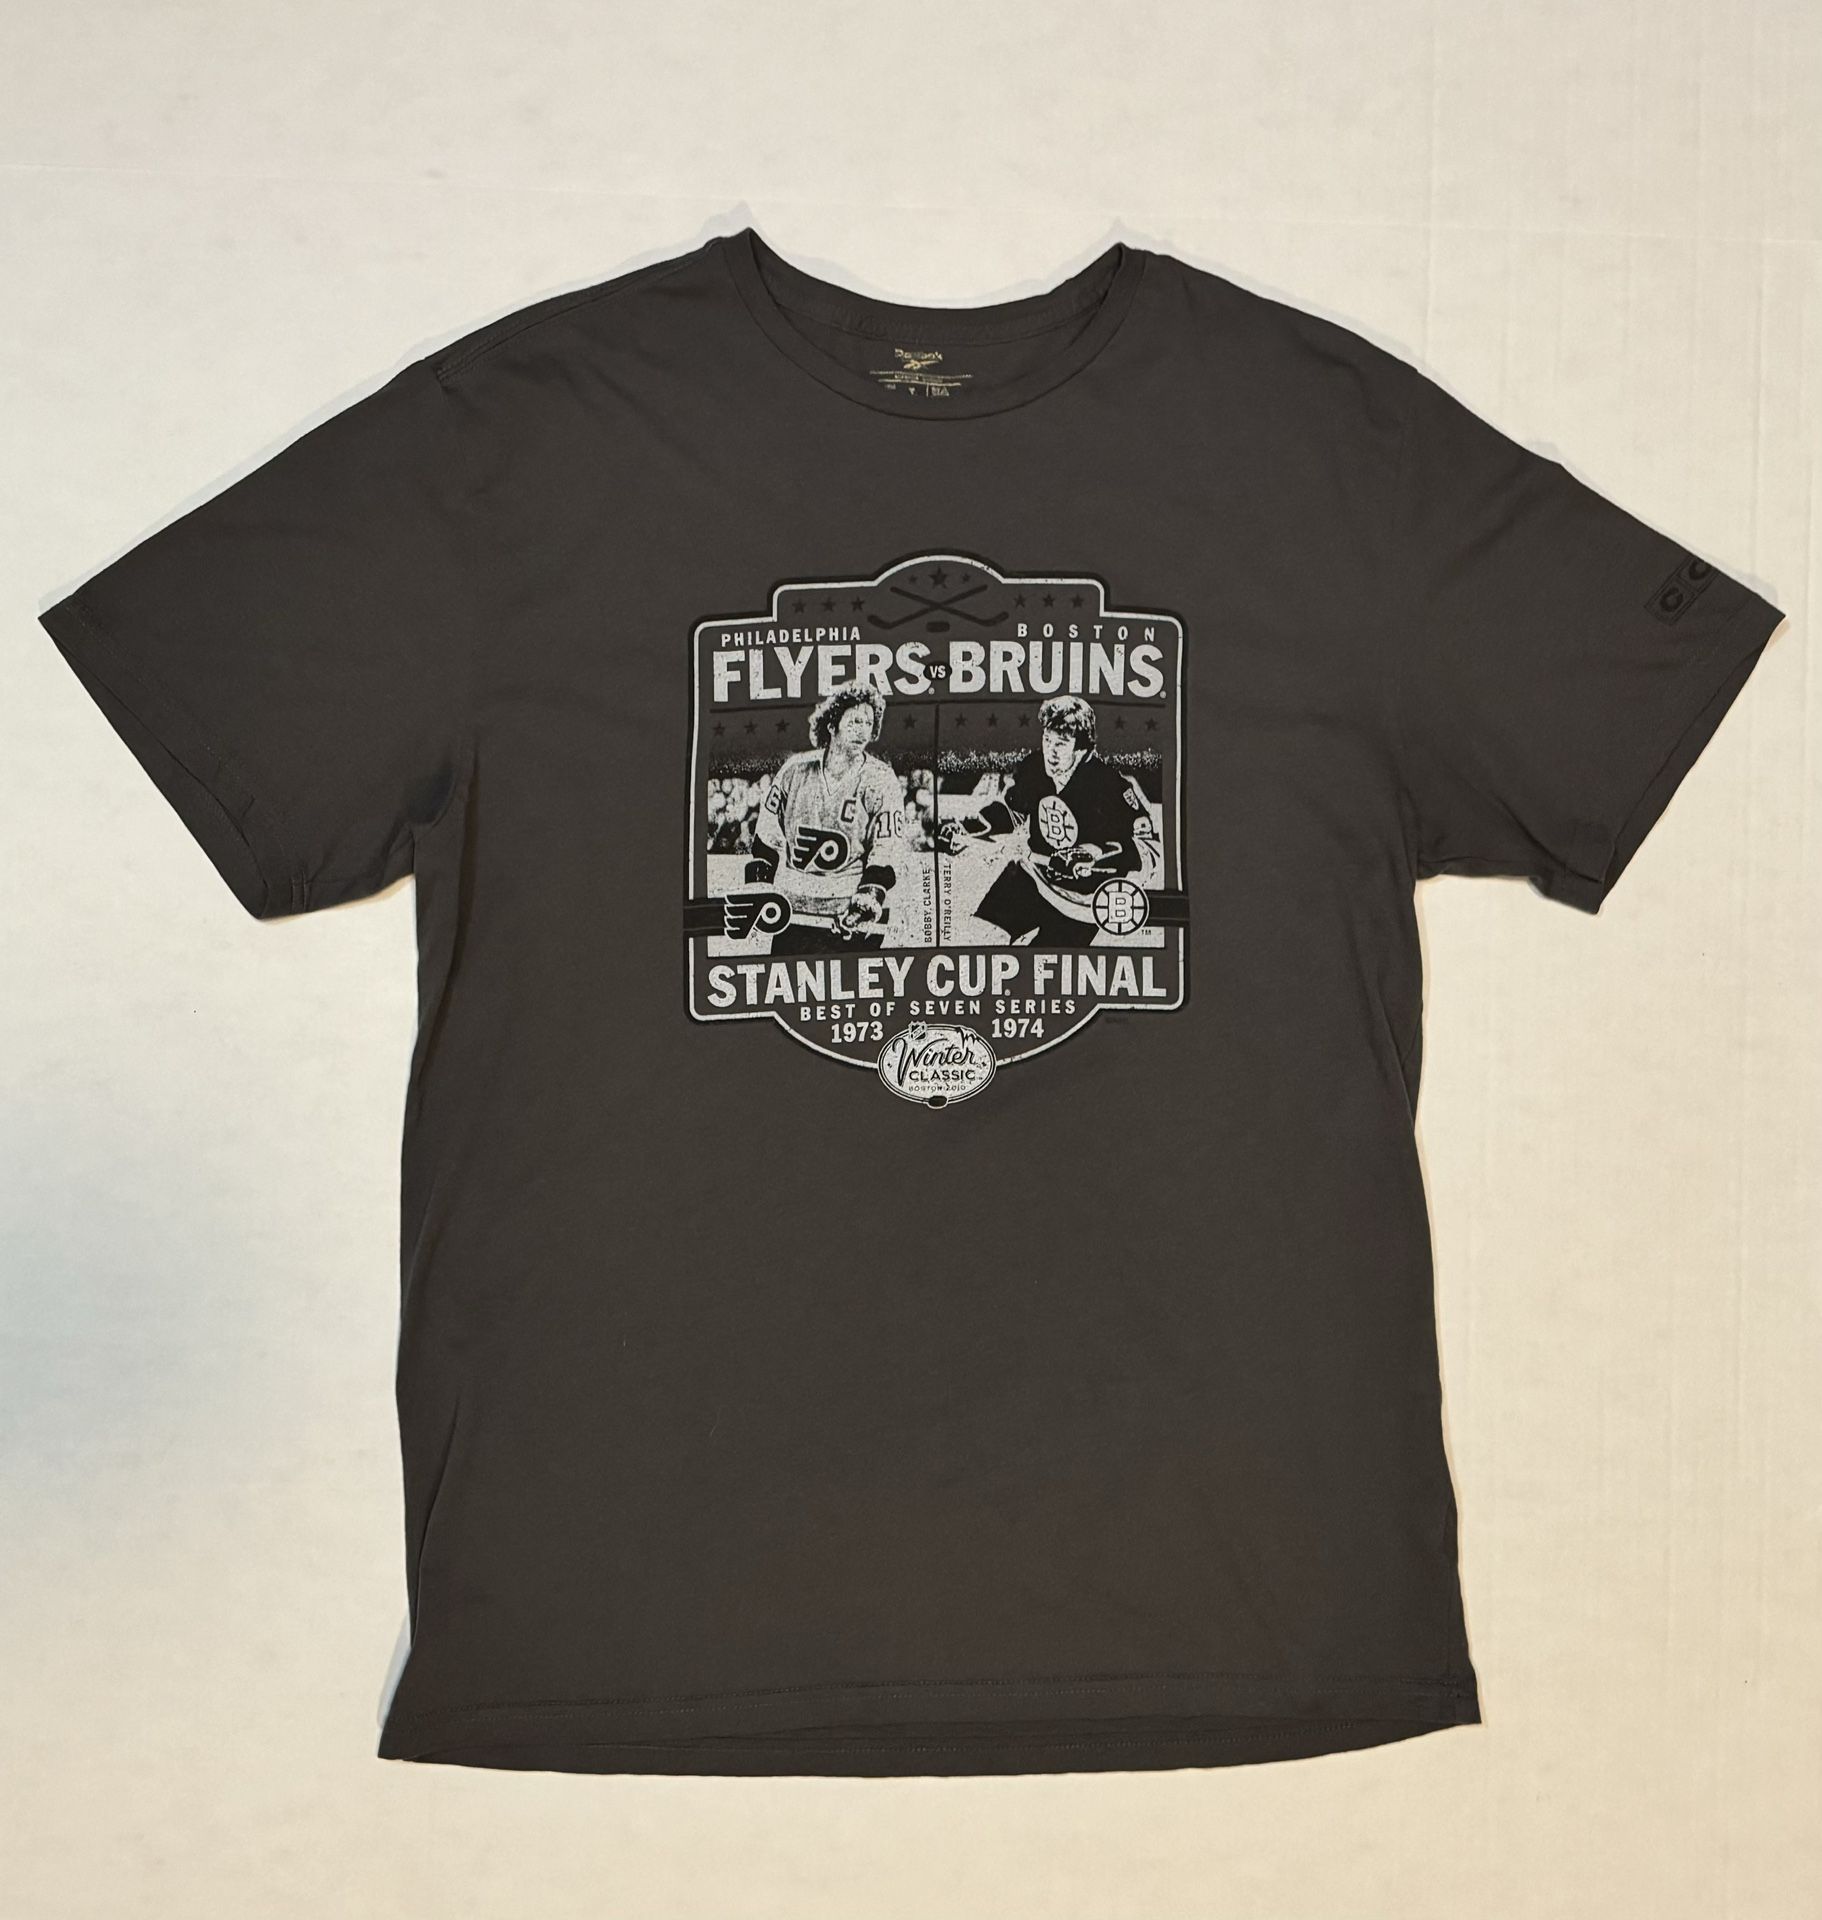 Reebok 2010 Winter Classic T Shirt. Flyers Vs Bruins. Size Large.